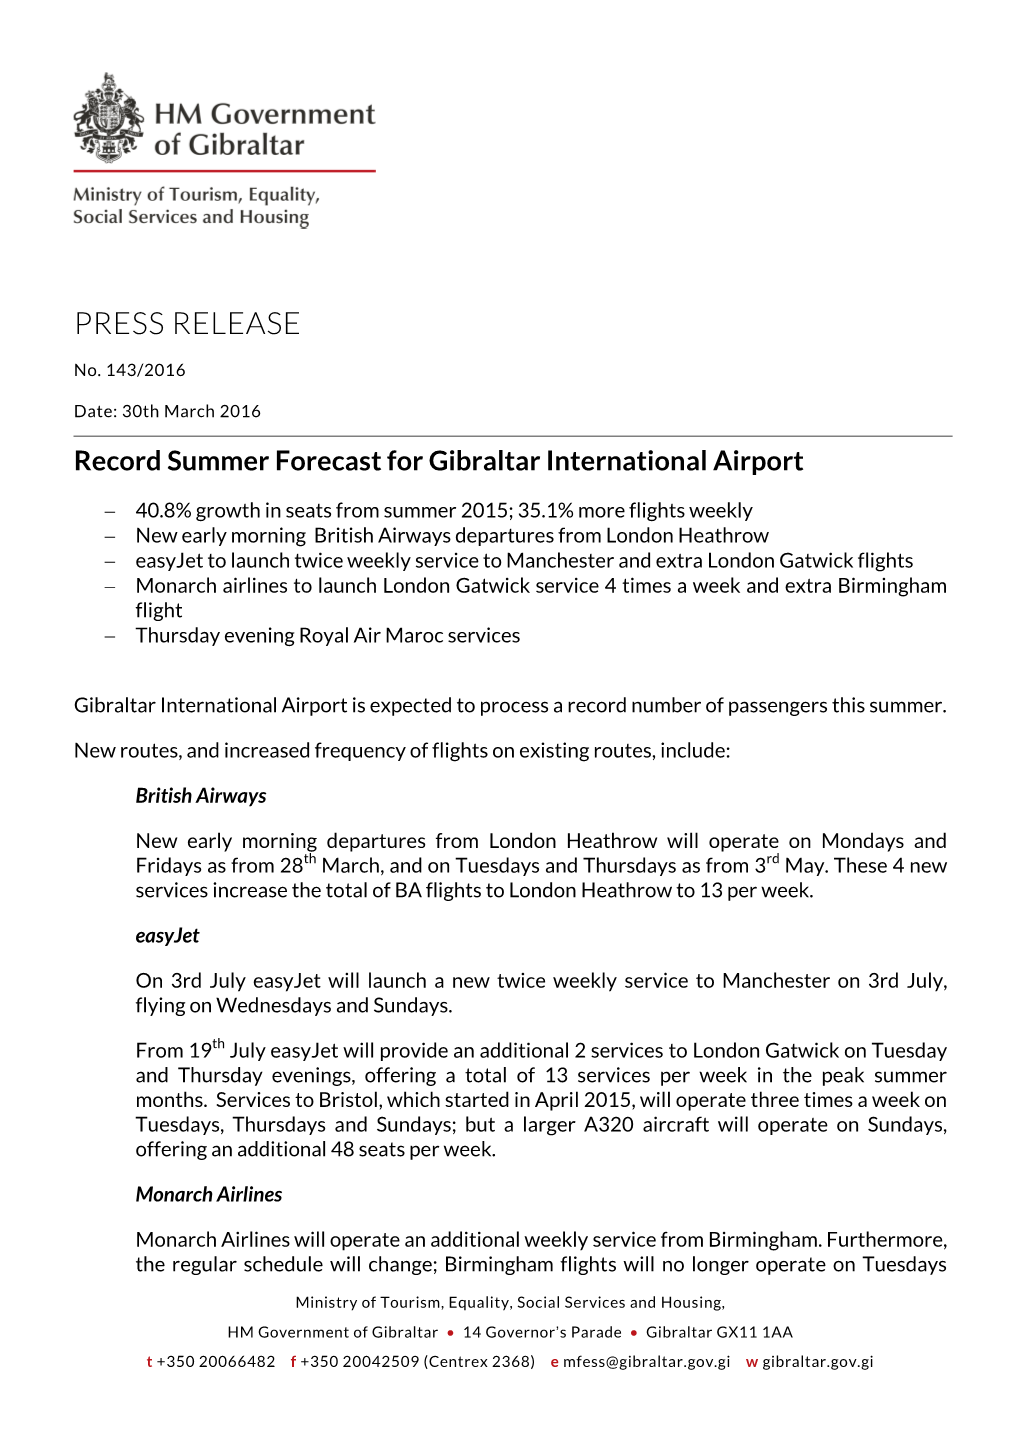 Record Summer Forecast for Gibraltar International Airport